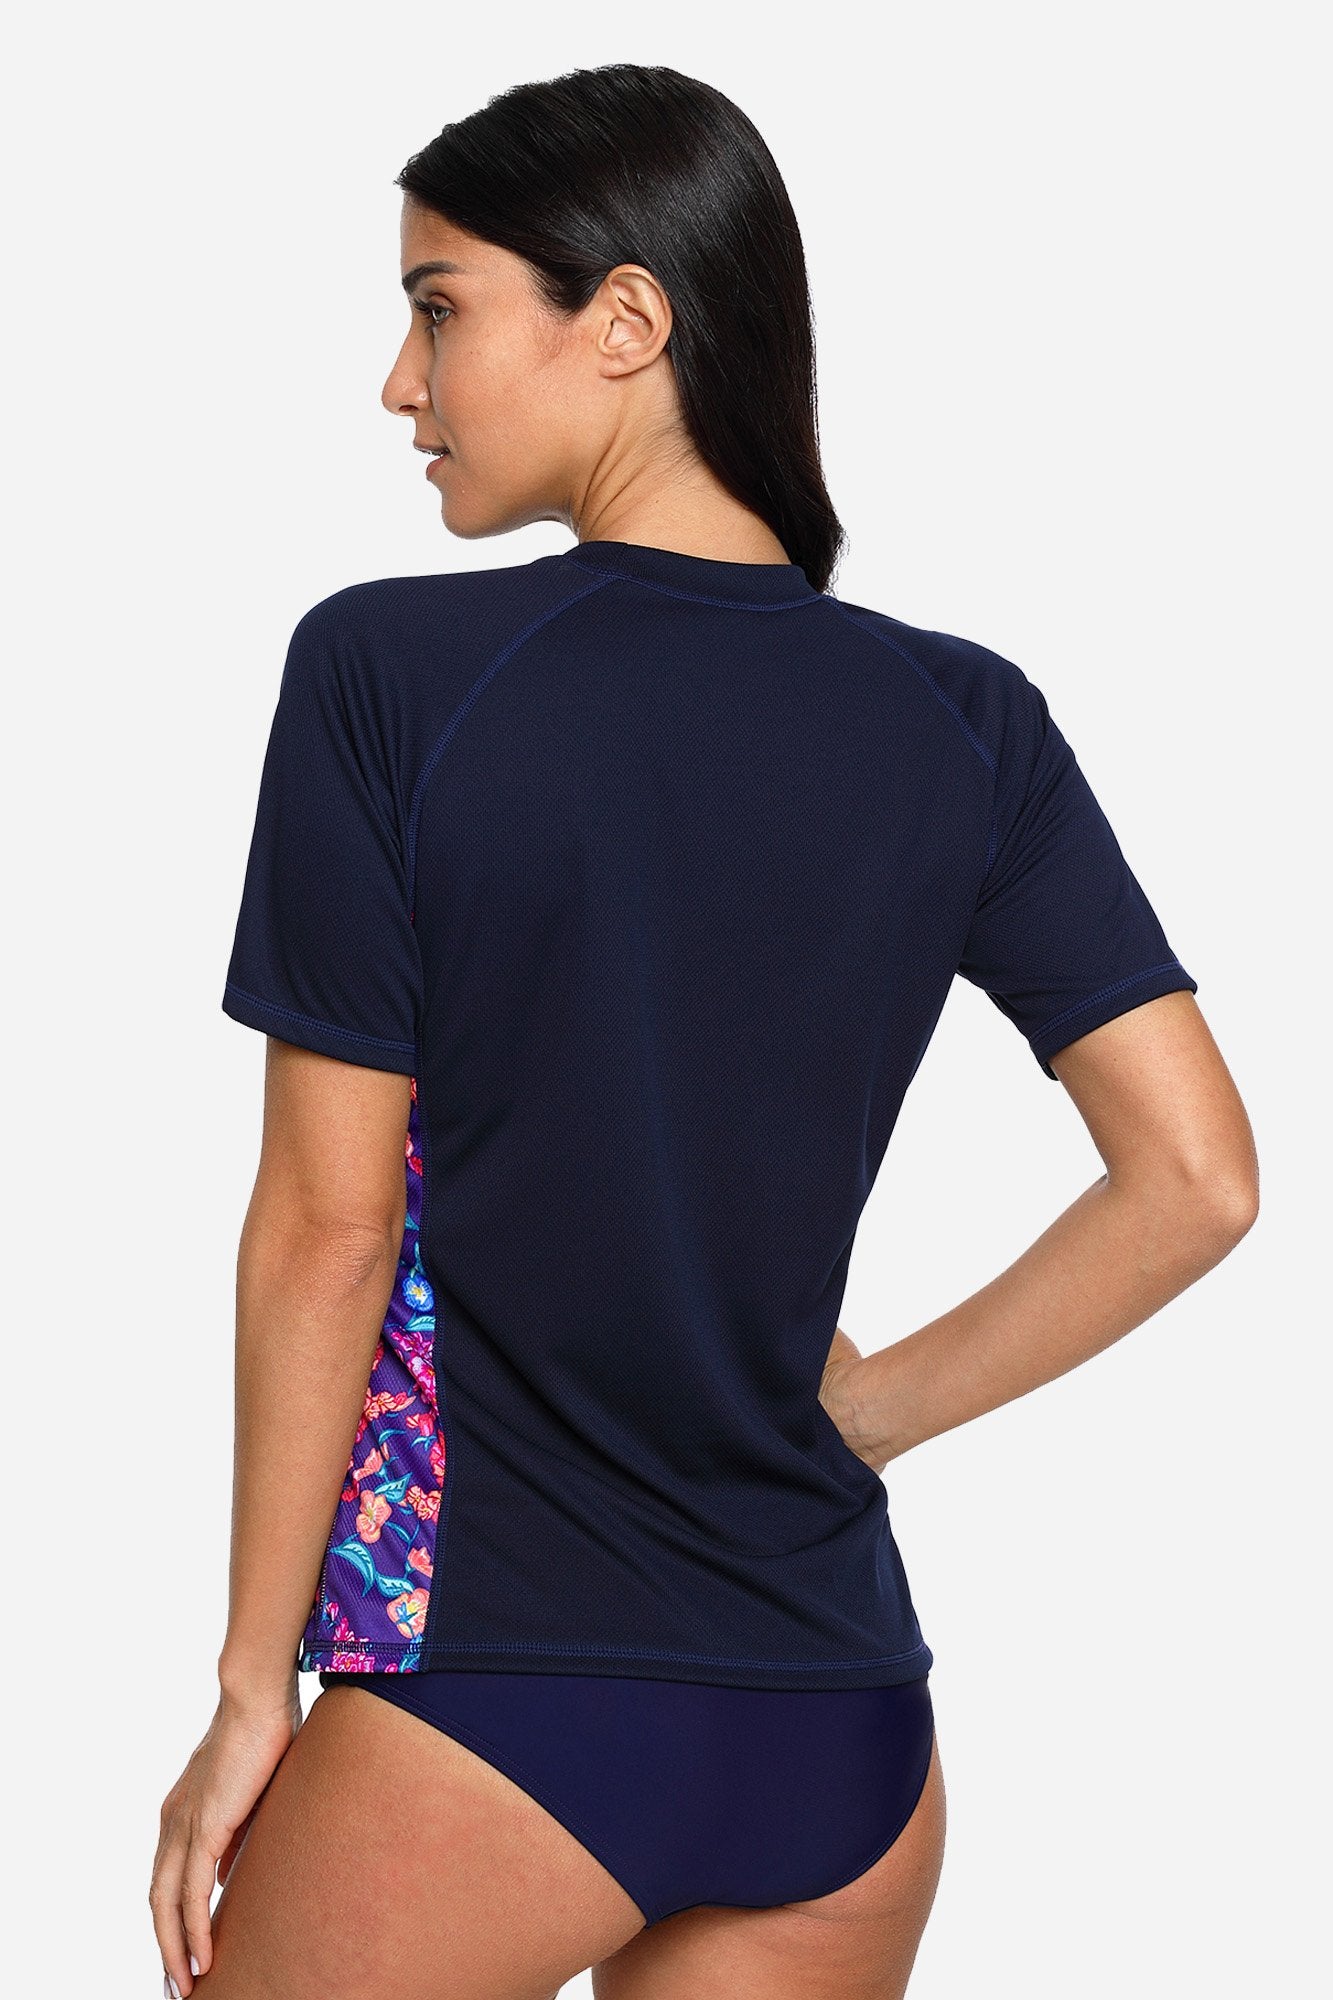 Women's Navy Floral Printed Short Sleeve UPF 50+ Rashguard Swim Shirt